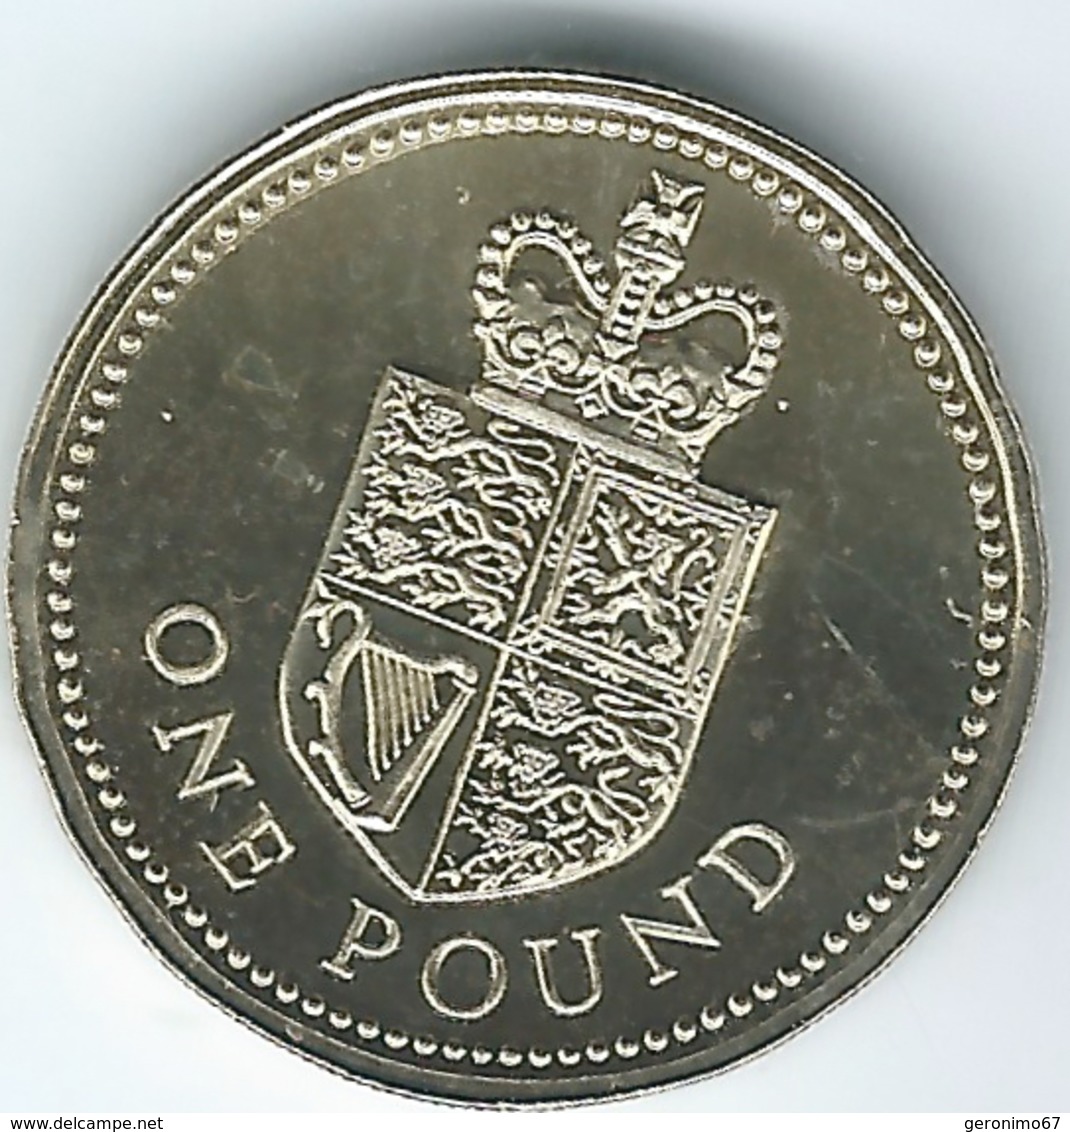 Great Britain / United Kingdom - 1998 - 1 Pound - Elizabeth II - Crowned Royal Shield - KM954 - 1 Pound